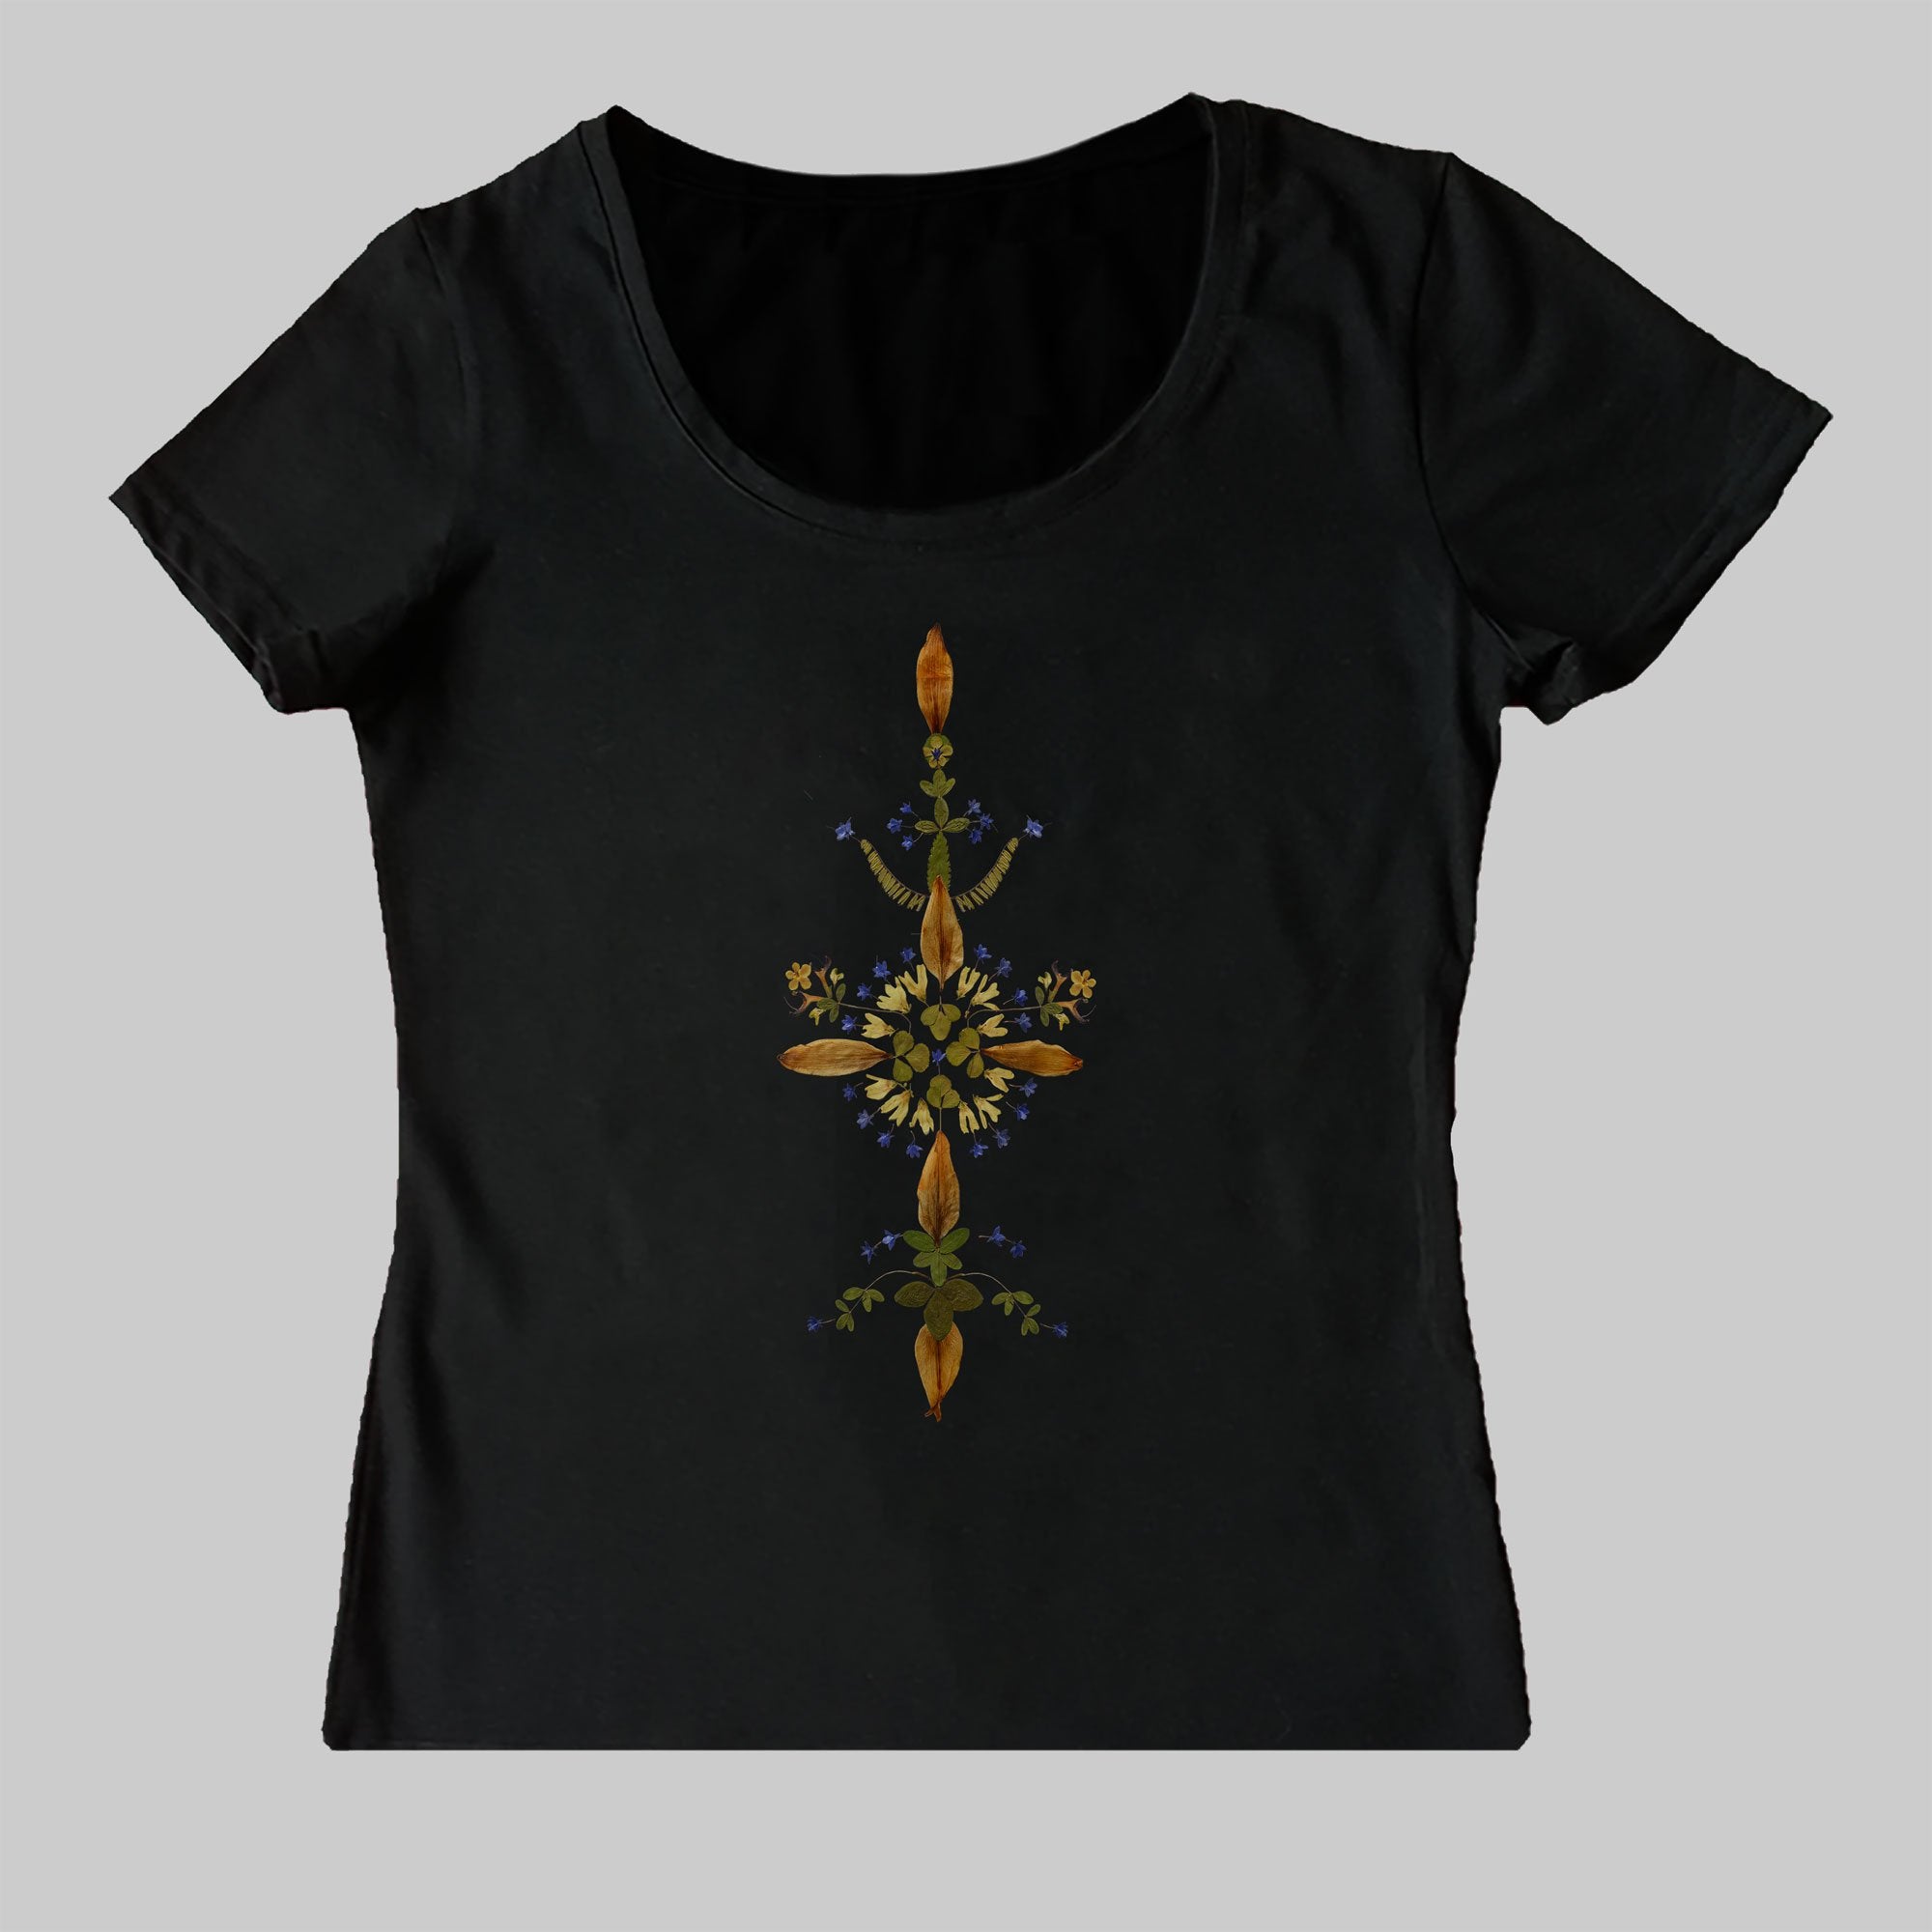 Cross-Like Ornament T-Shirt (Women's)